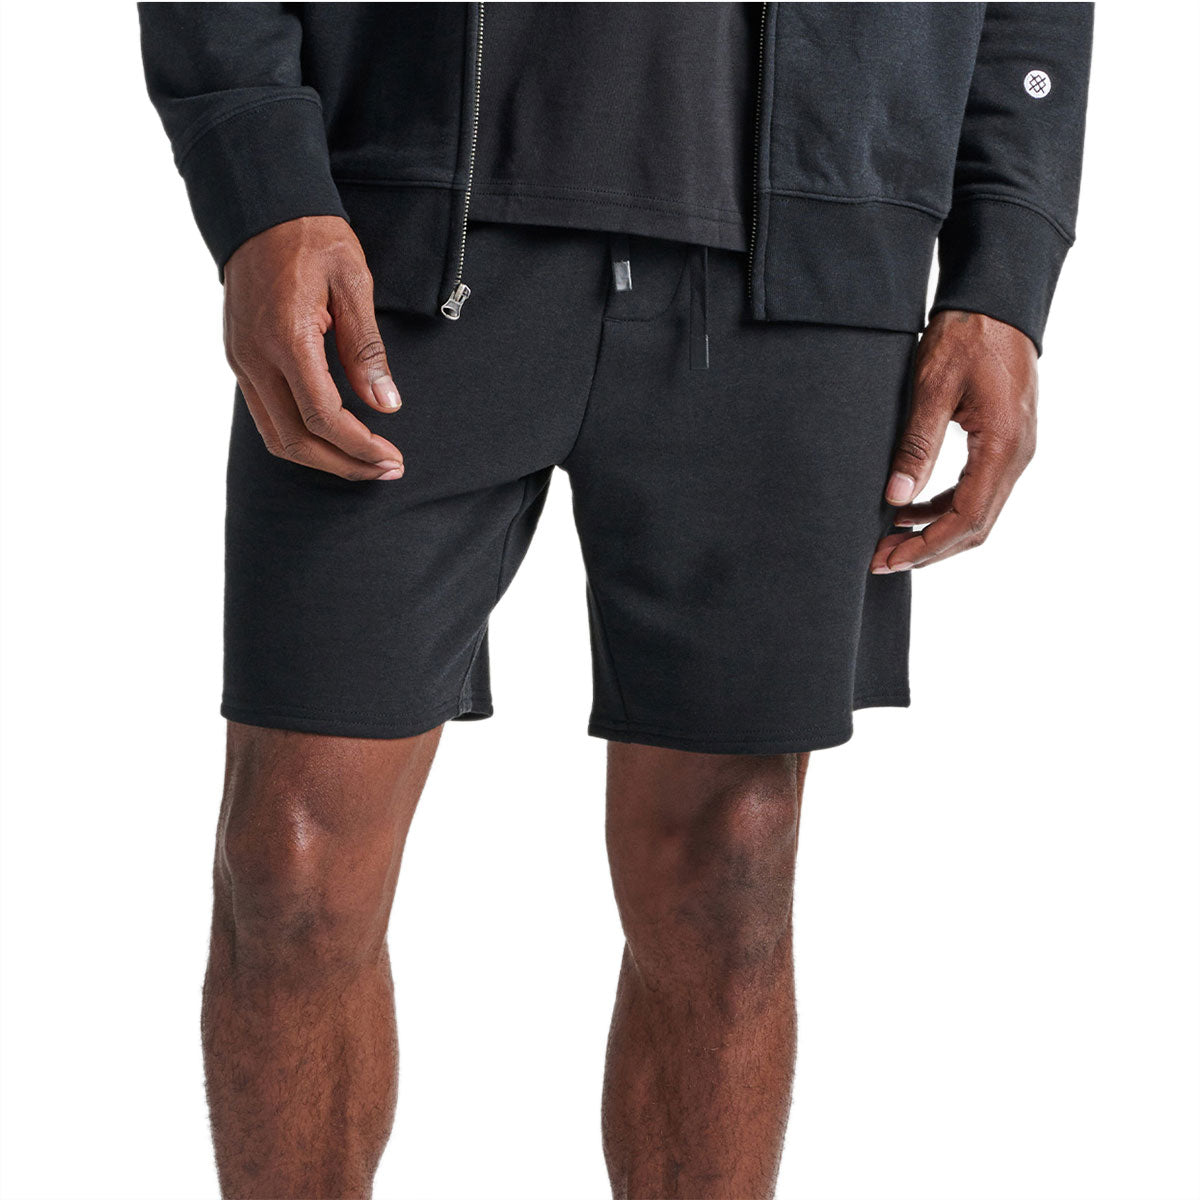 Stance Shelter Shorts - Black image 2